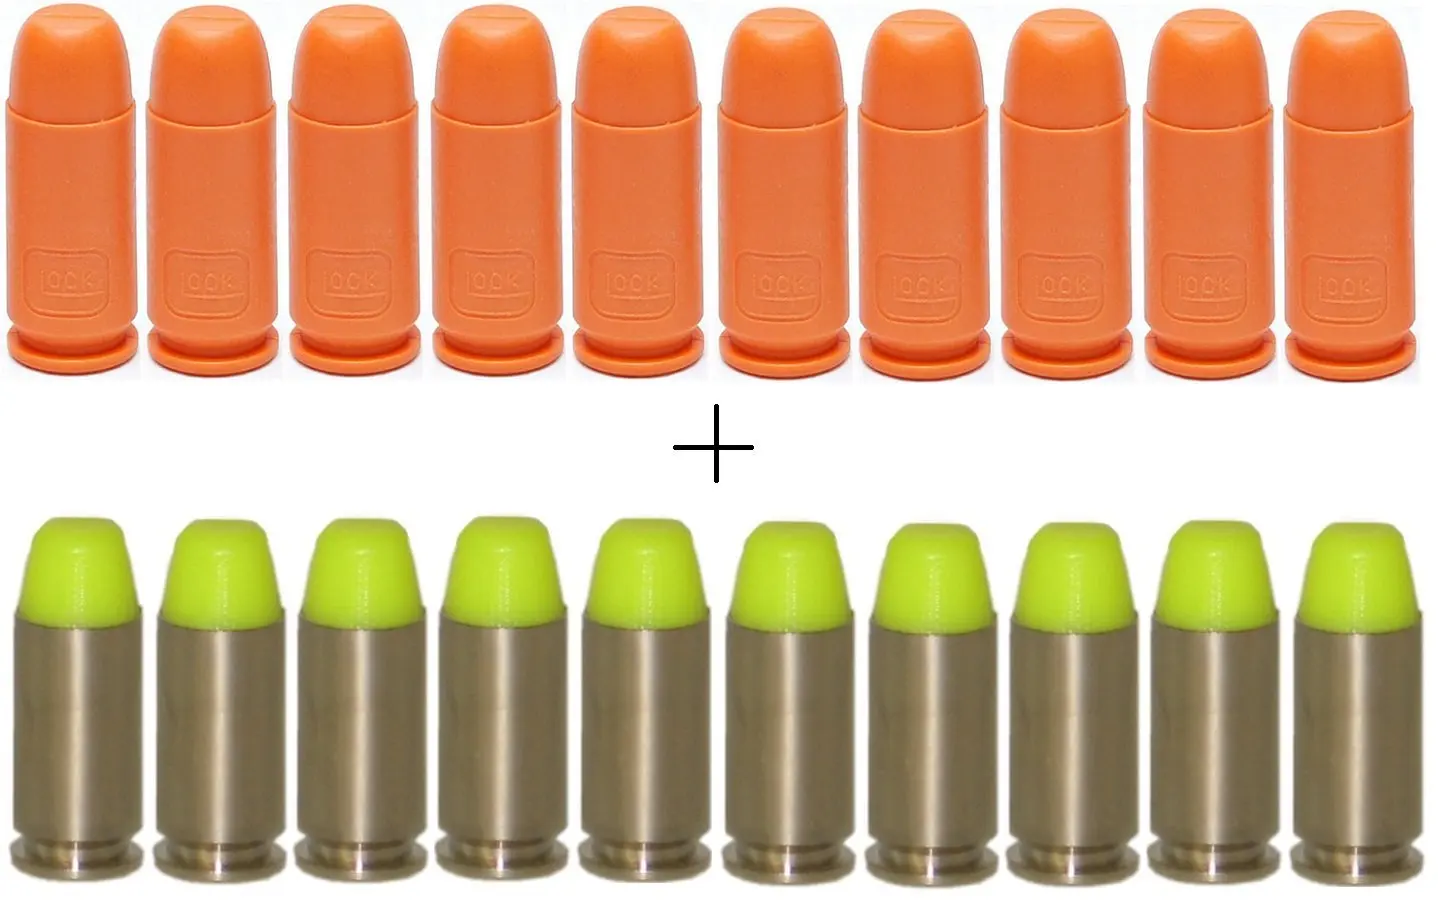 9x19 Parabellum Cartridge. Dart tag патроны. 9mm Rounds. 2000 rounds